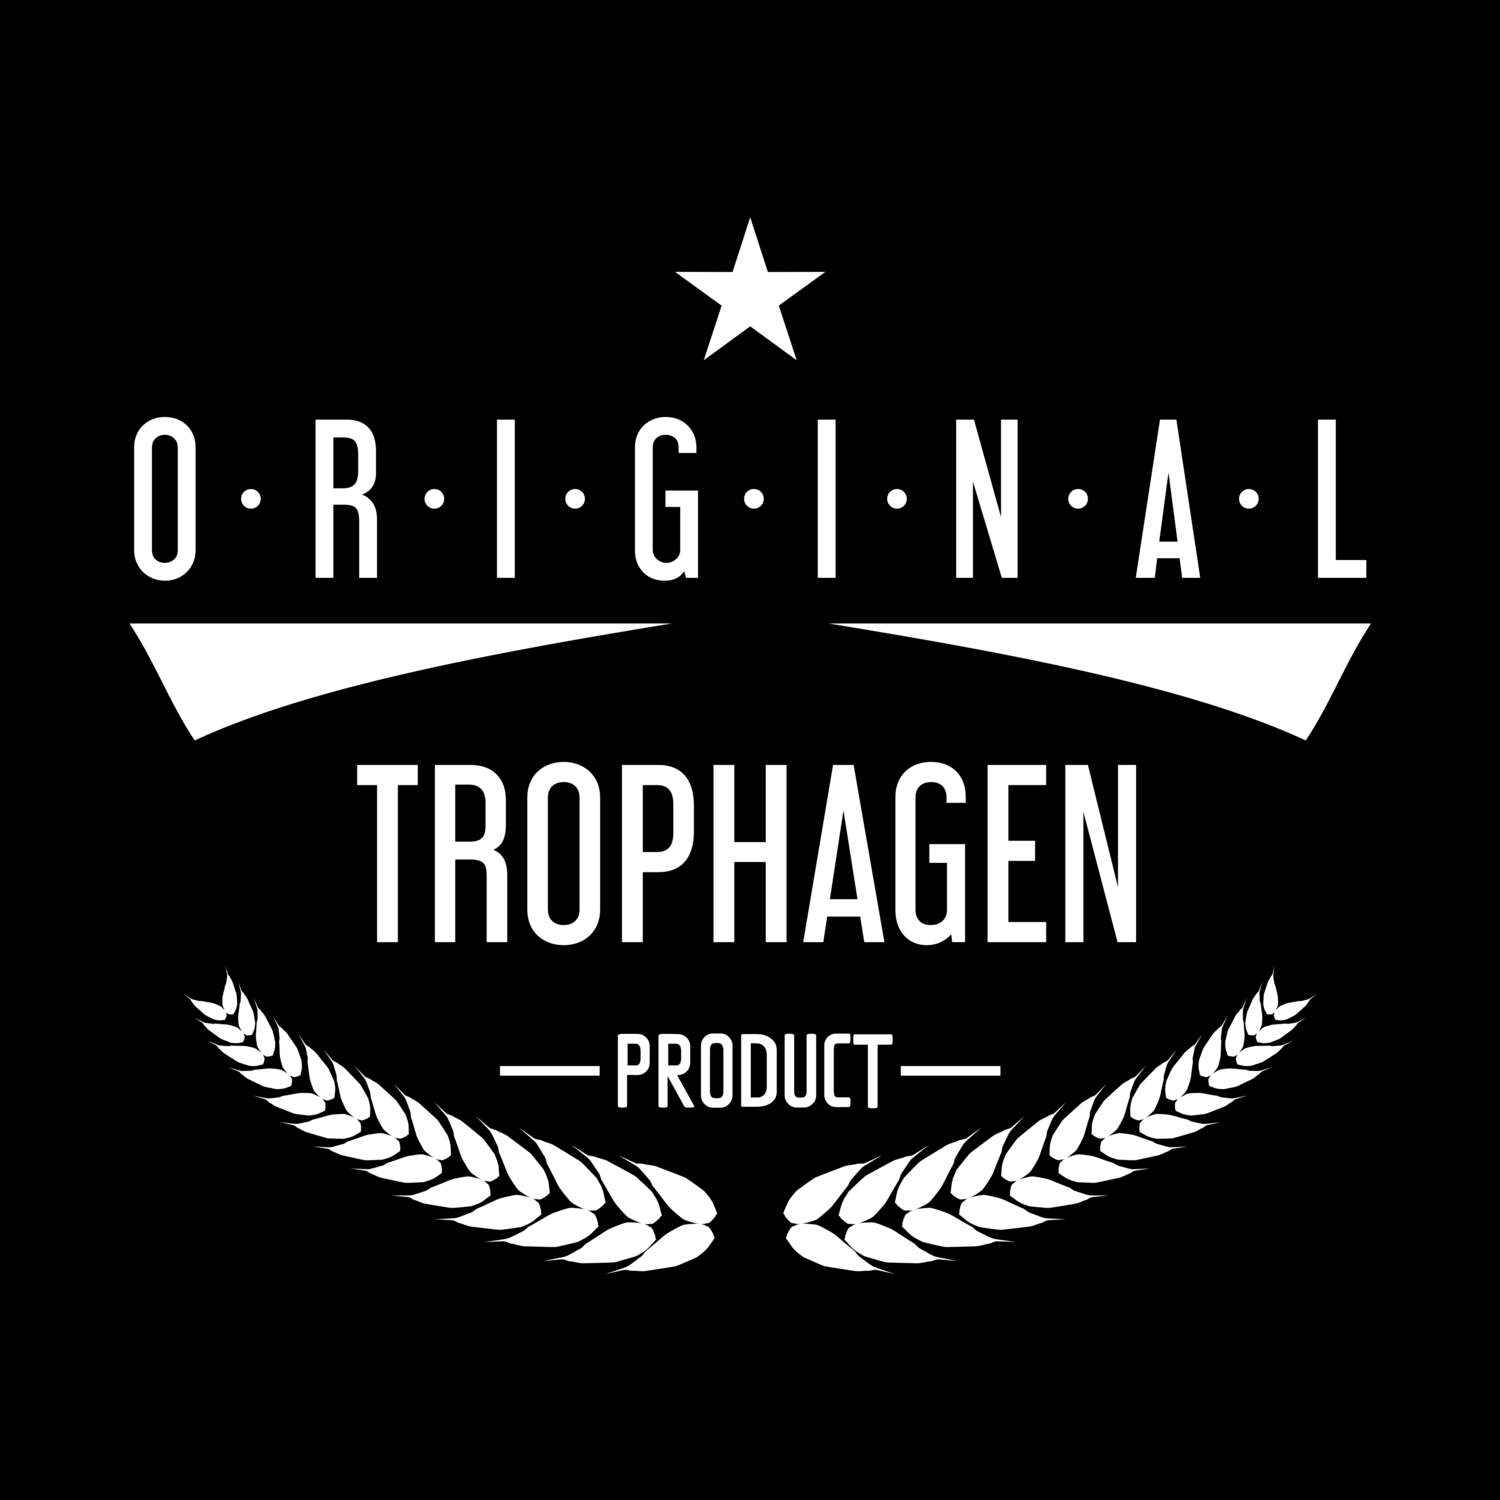 Trophagen T-Shirt »Original Product«